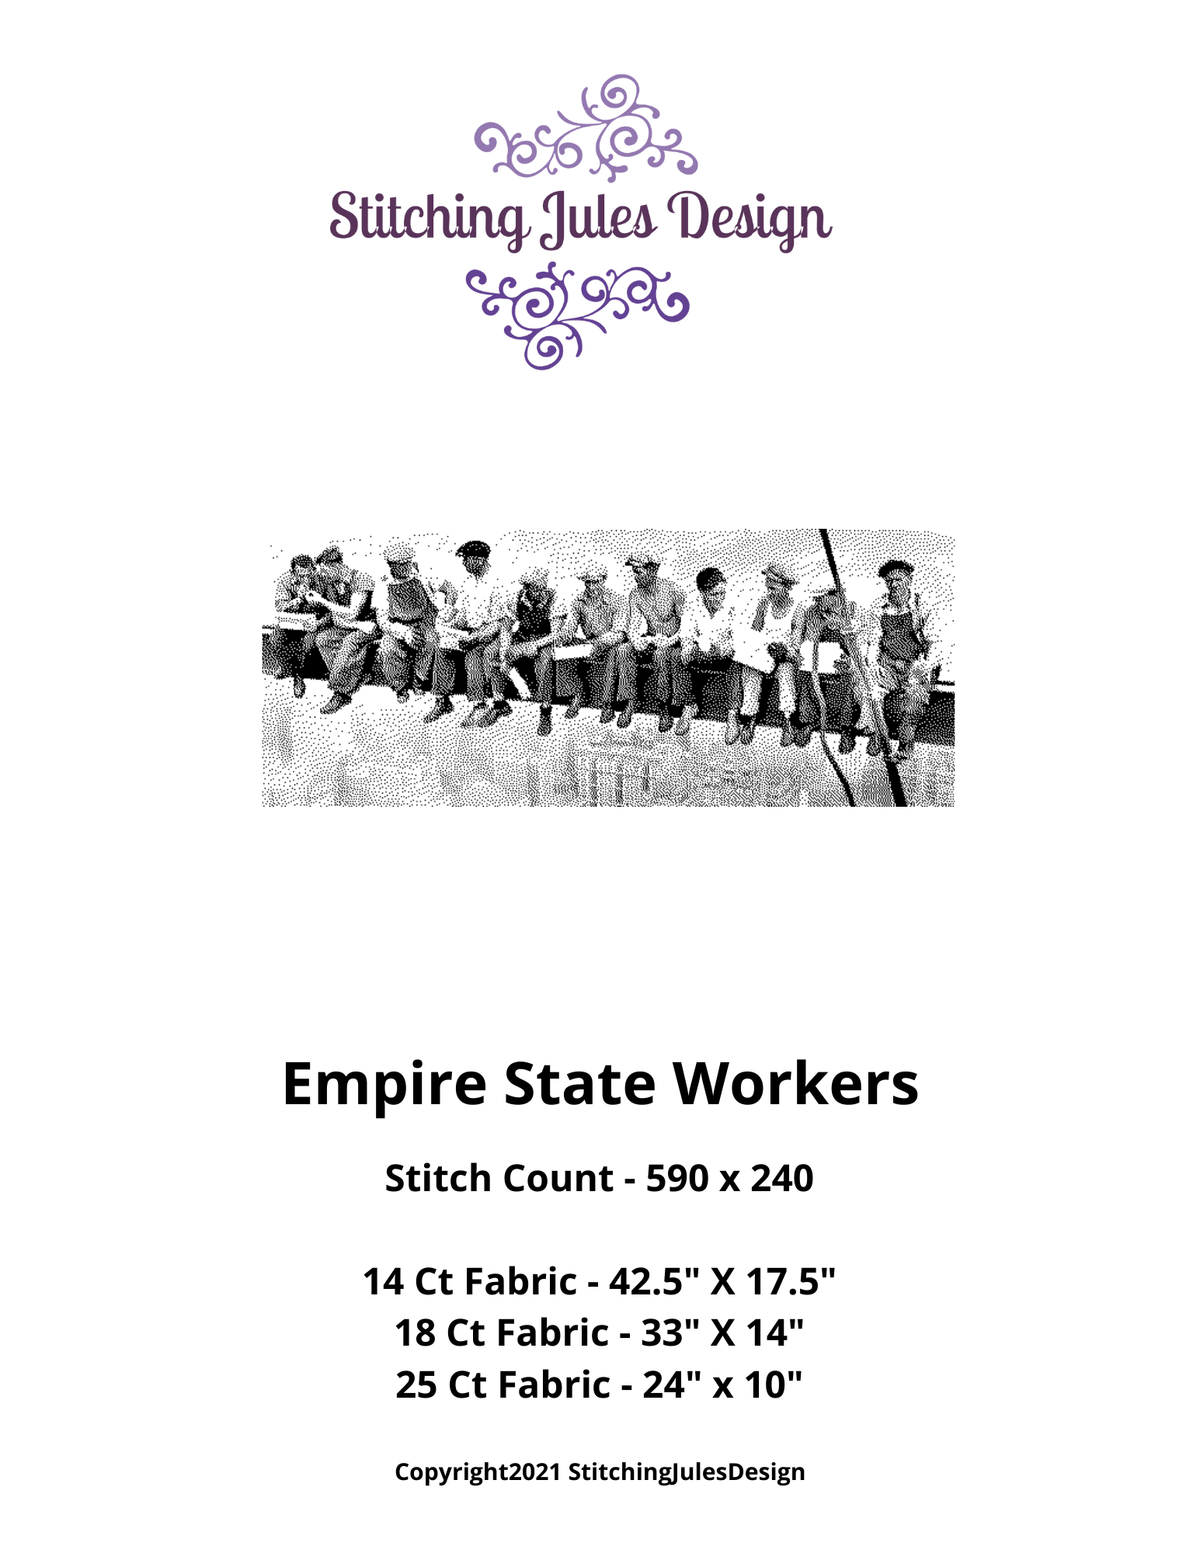 Stitching Jules Design Cross Stitch Pattern Empire State Workers Monochrome Cross Stitch Design Digital Download